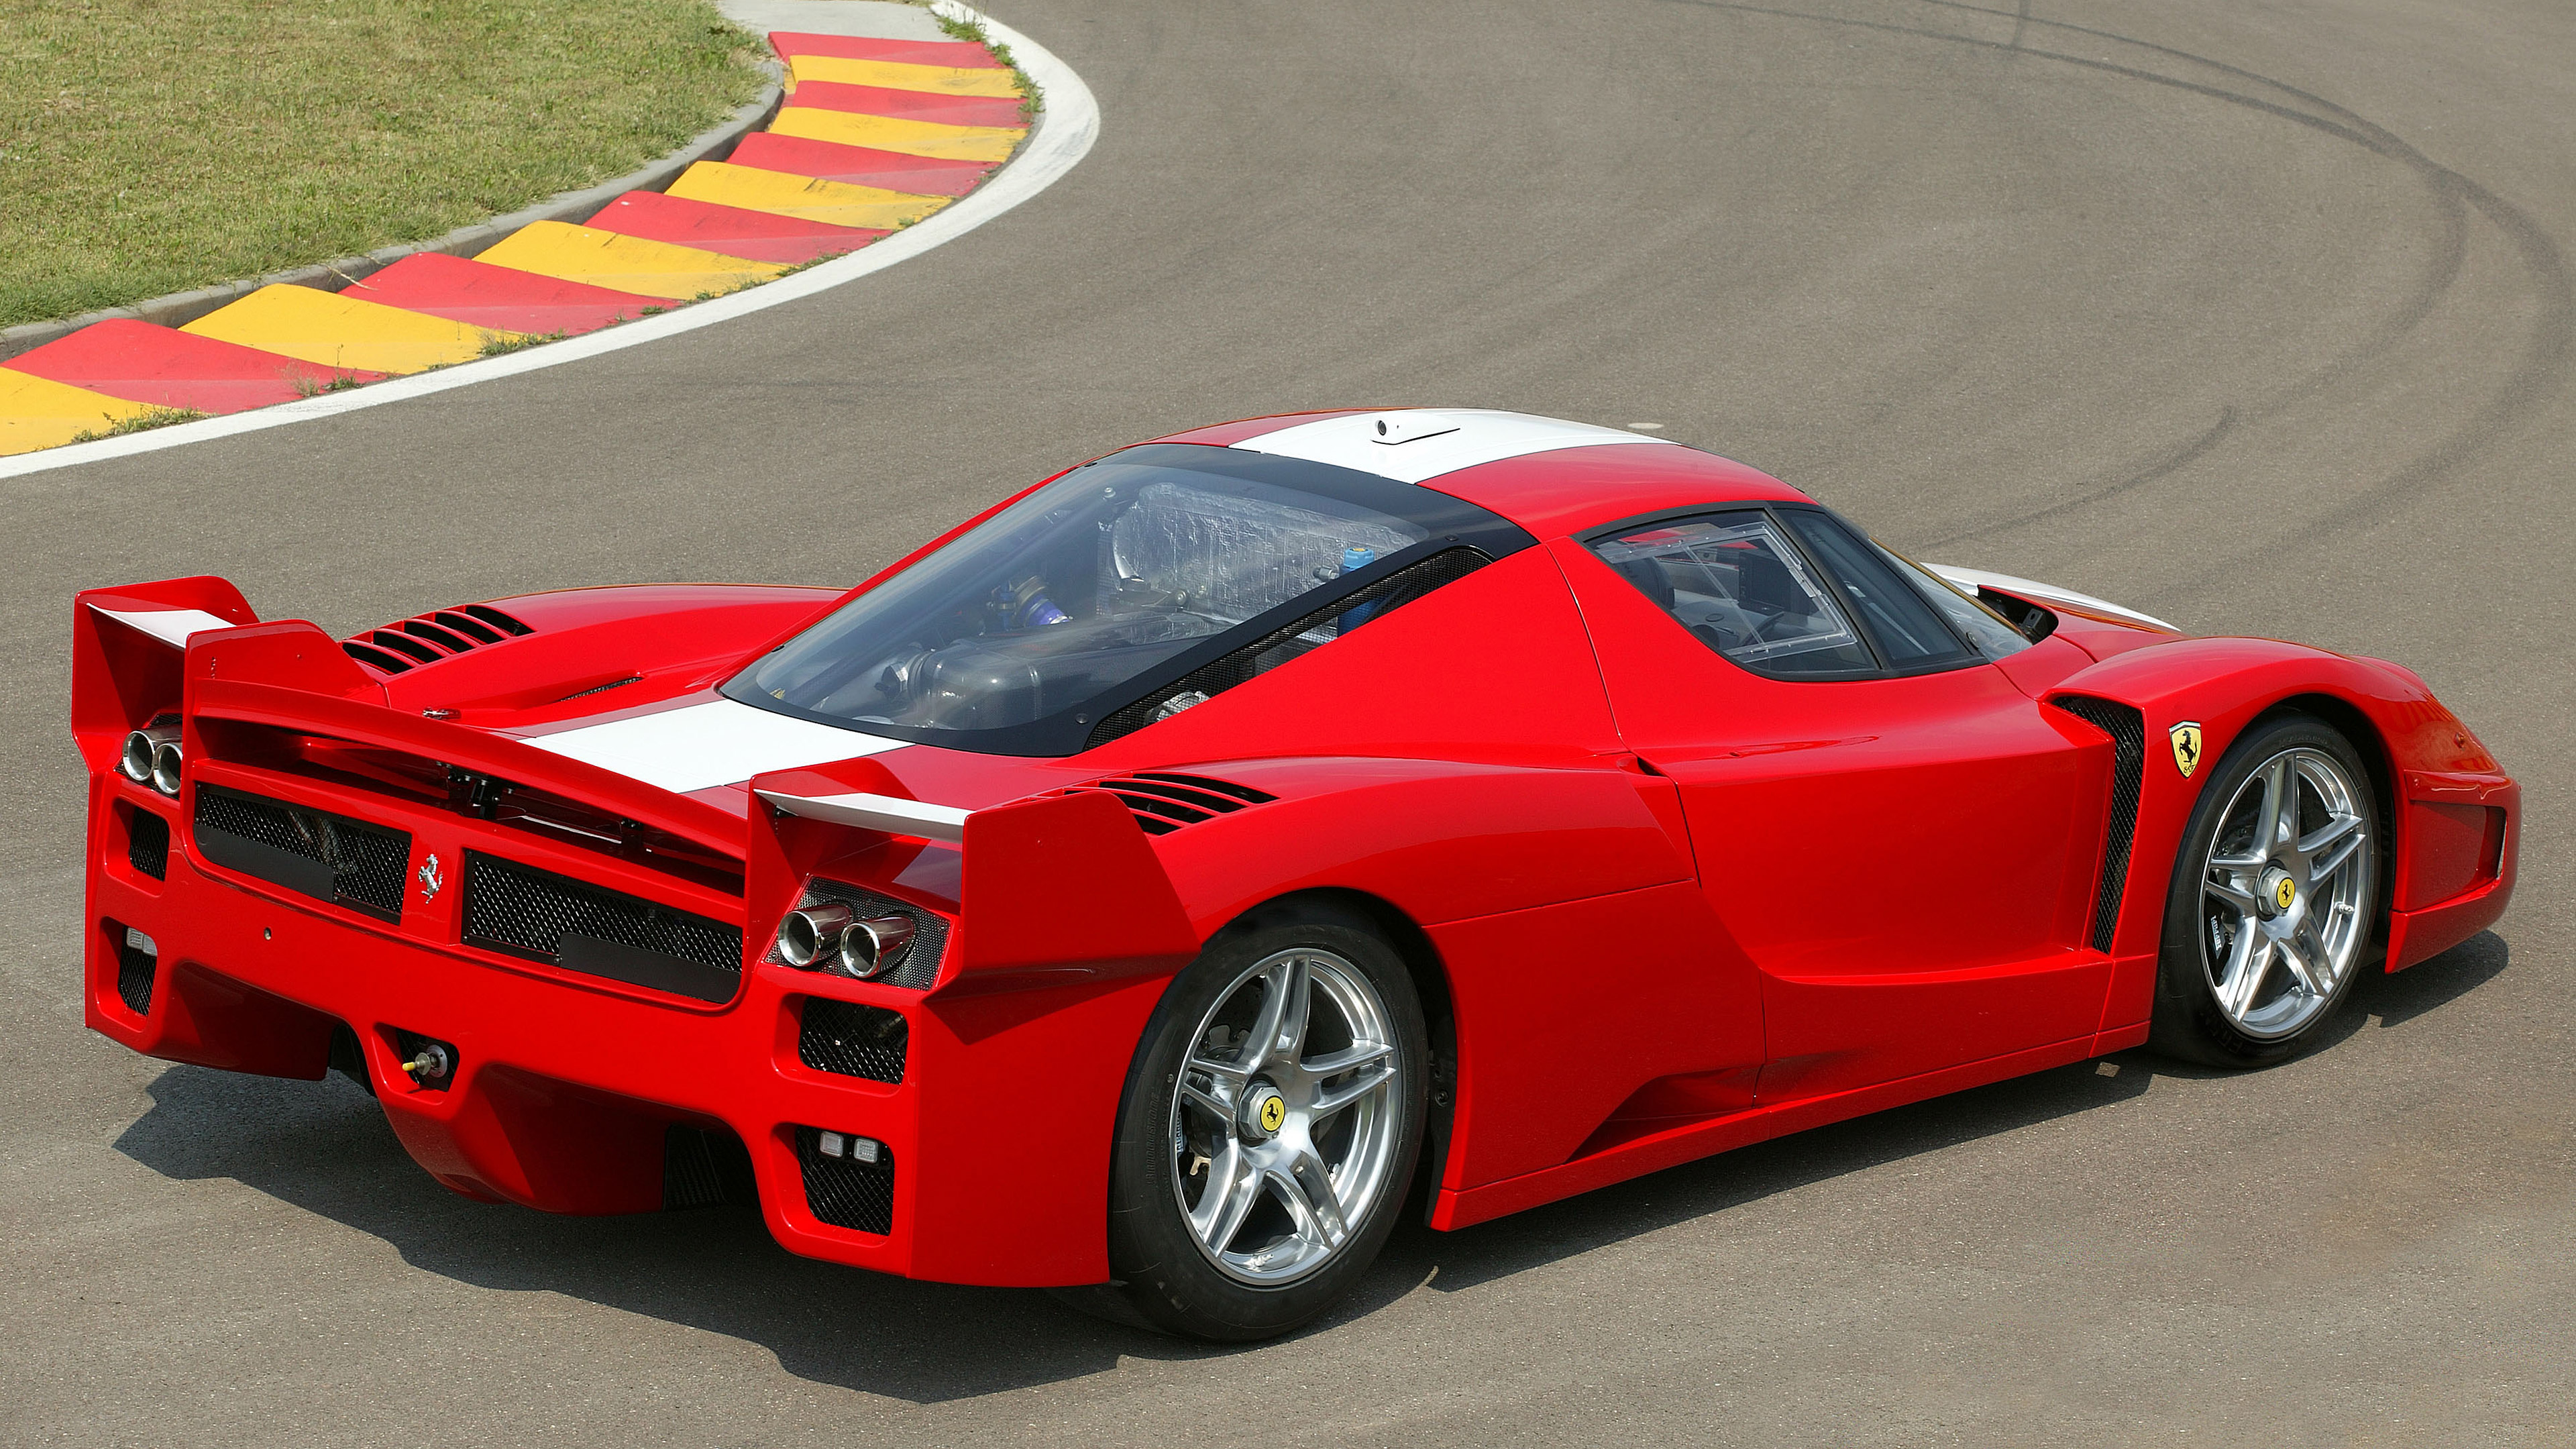  2005 Ferrari FXX Wallpaper.